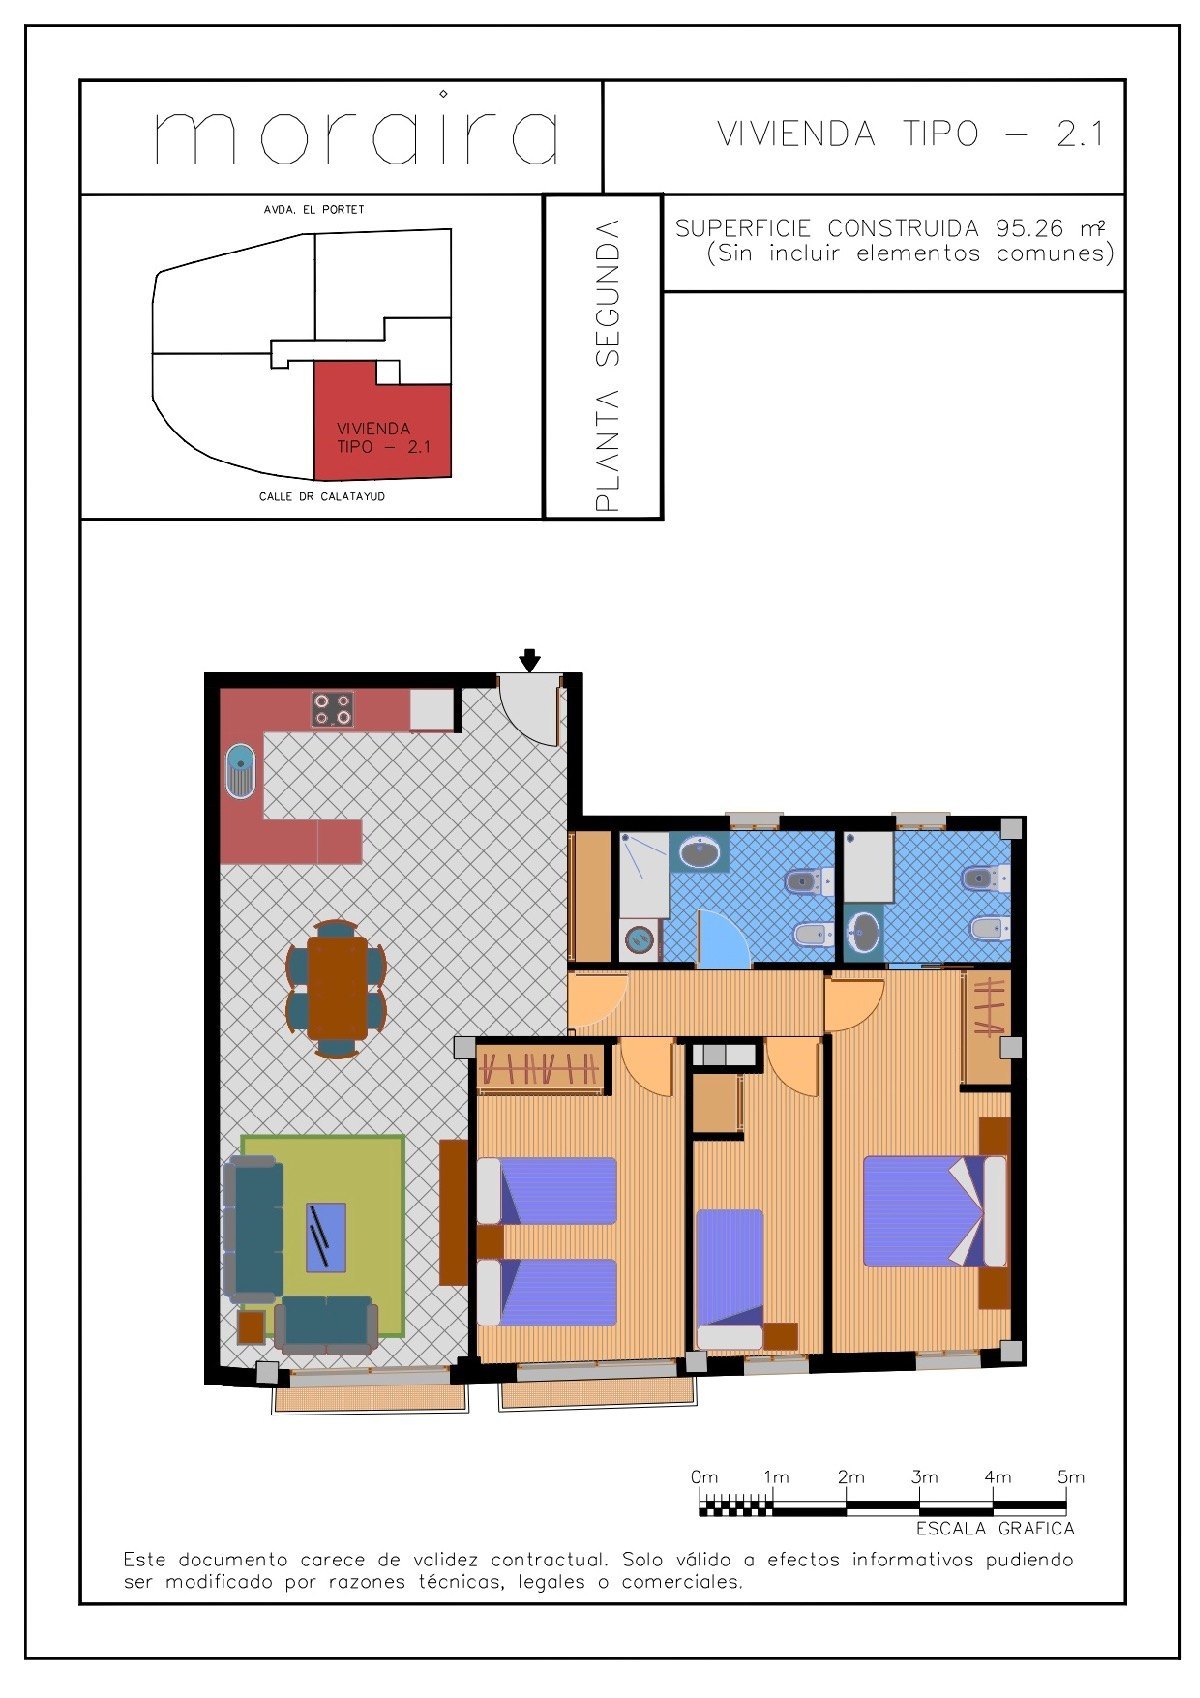 New build apartment for sale in the centre of Moraira, Costa Blanca